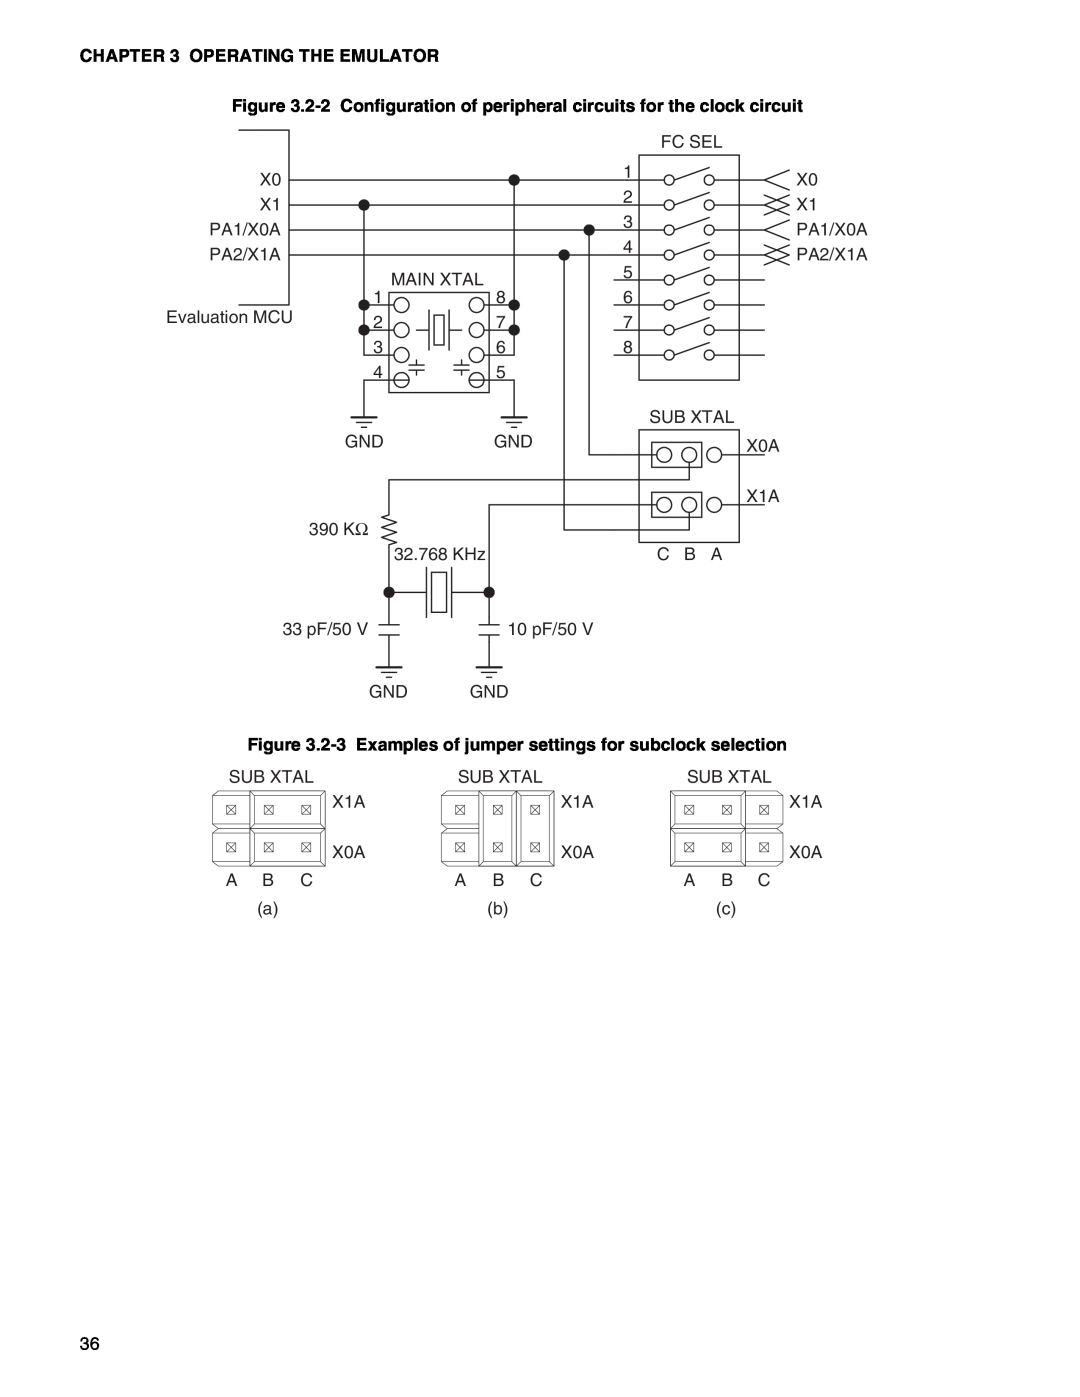 Fujitsu MB2147-01 manual Operating The Emulator, 2-3 Examples of jumper settings for subclock selection 